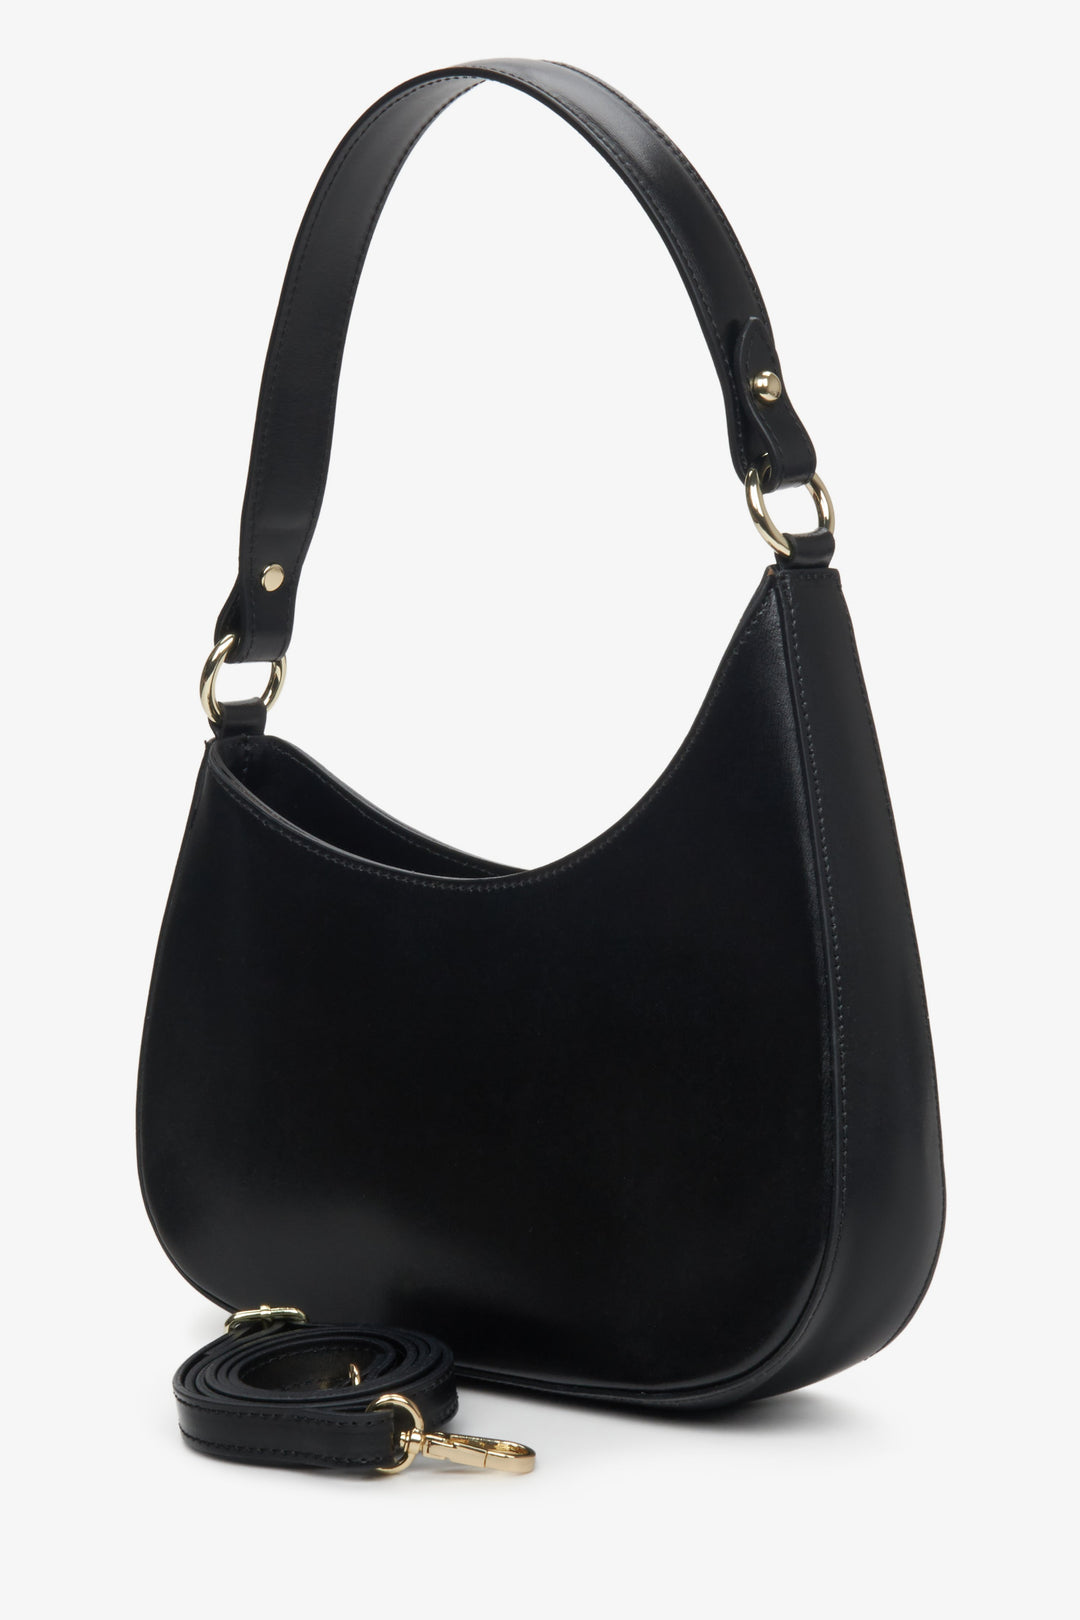 Women's Black Estro shoulder bag with detachable strap.